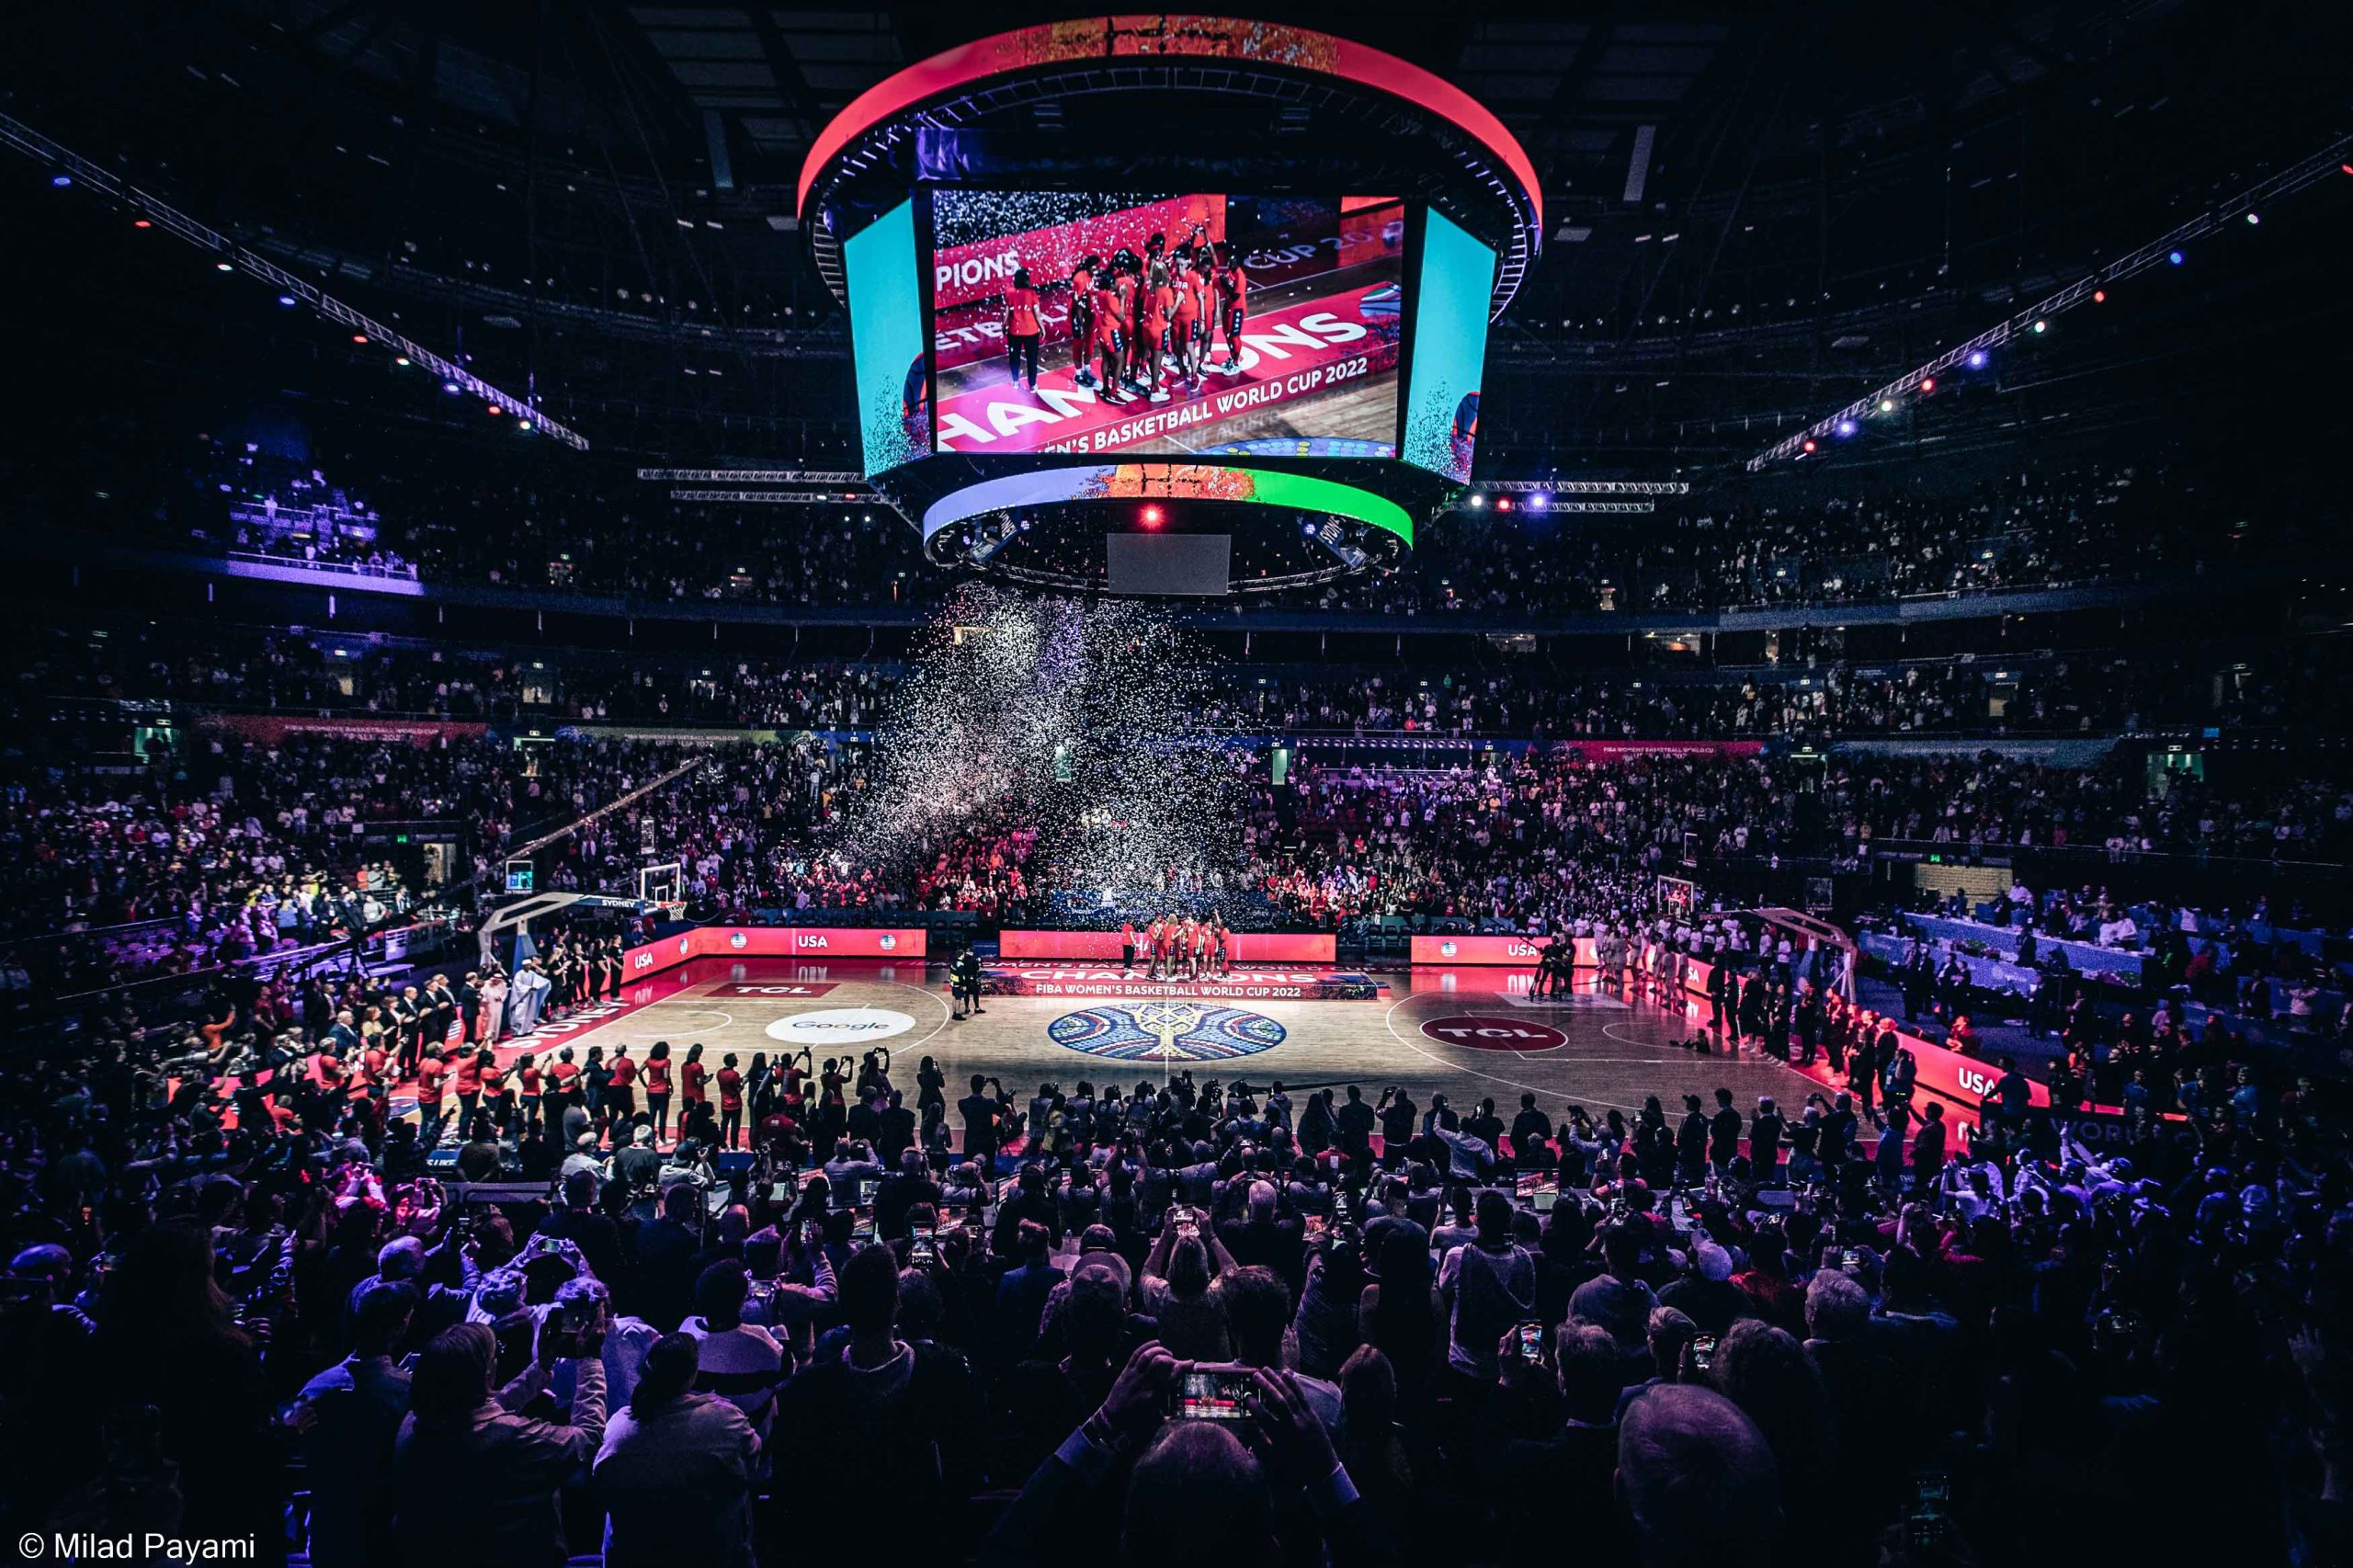 FIBA Women’s Basketball World Cup 2022 Closing ceremony